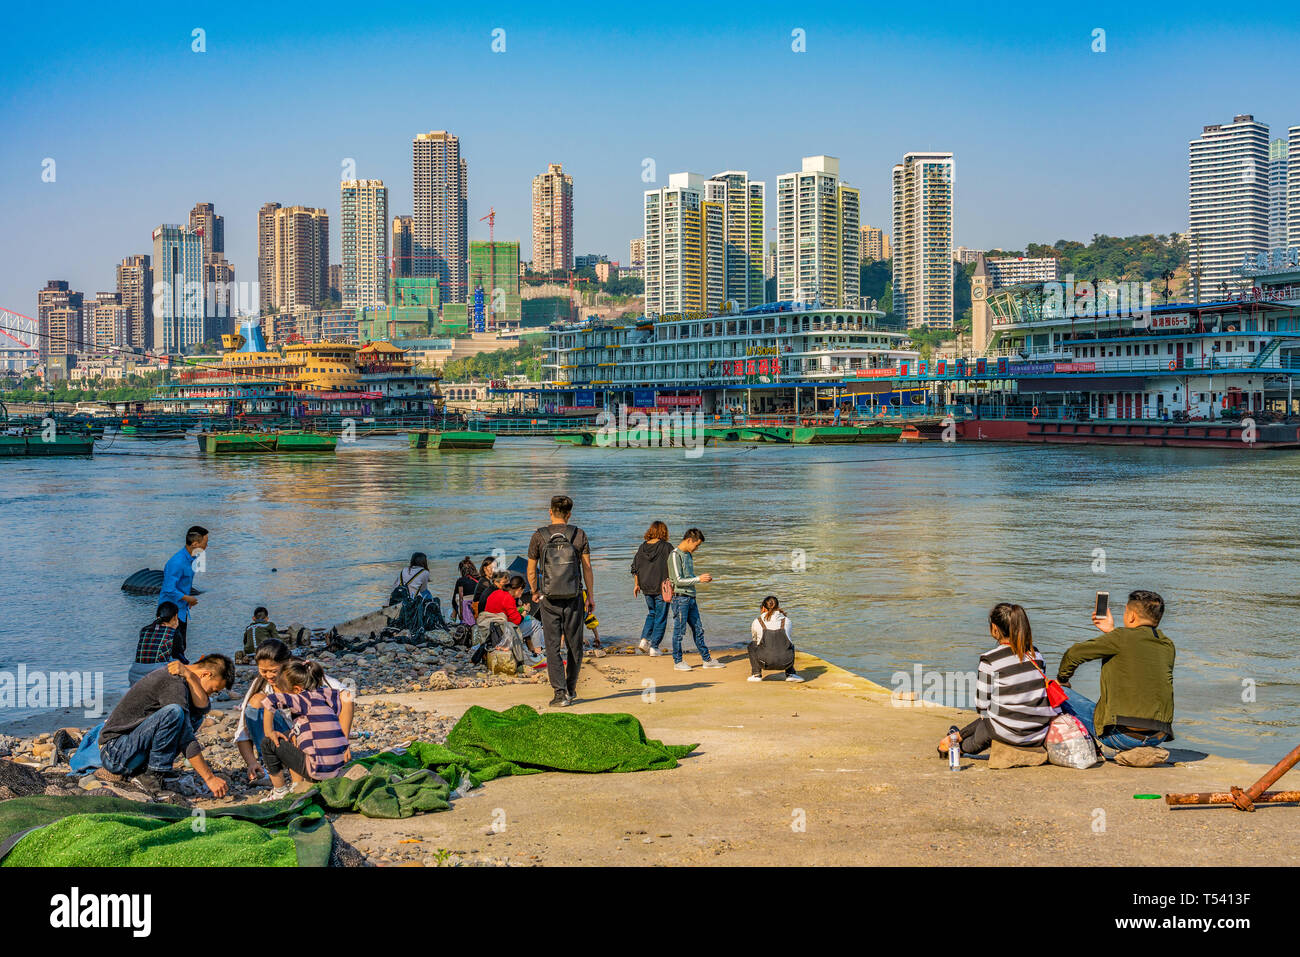 CHONGQING, CHINA - November 03: Ansicht der Menschen vor Ort von dem Fluss am Chaotianmen Docks on November 03, 2018 in Chongqing Stockfoto